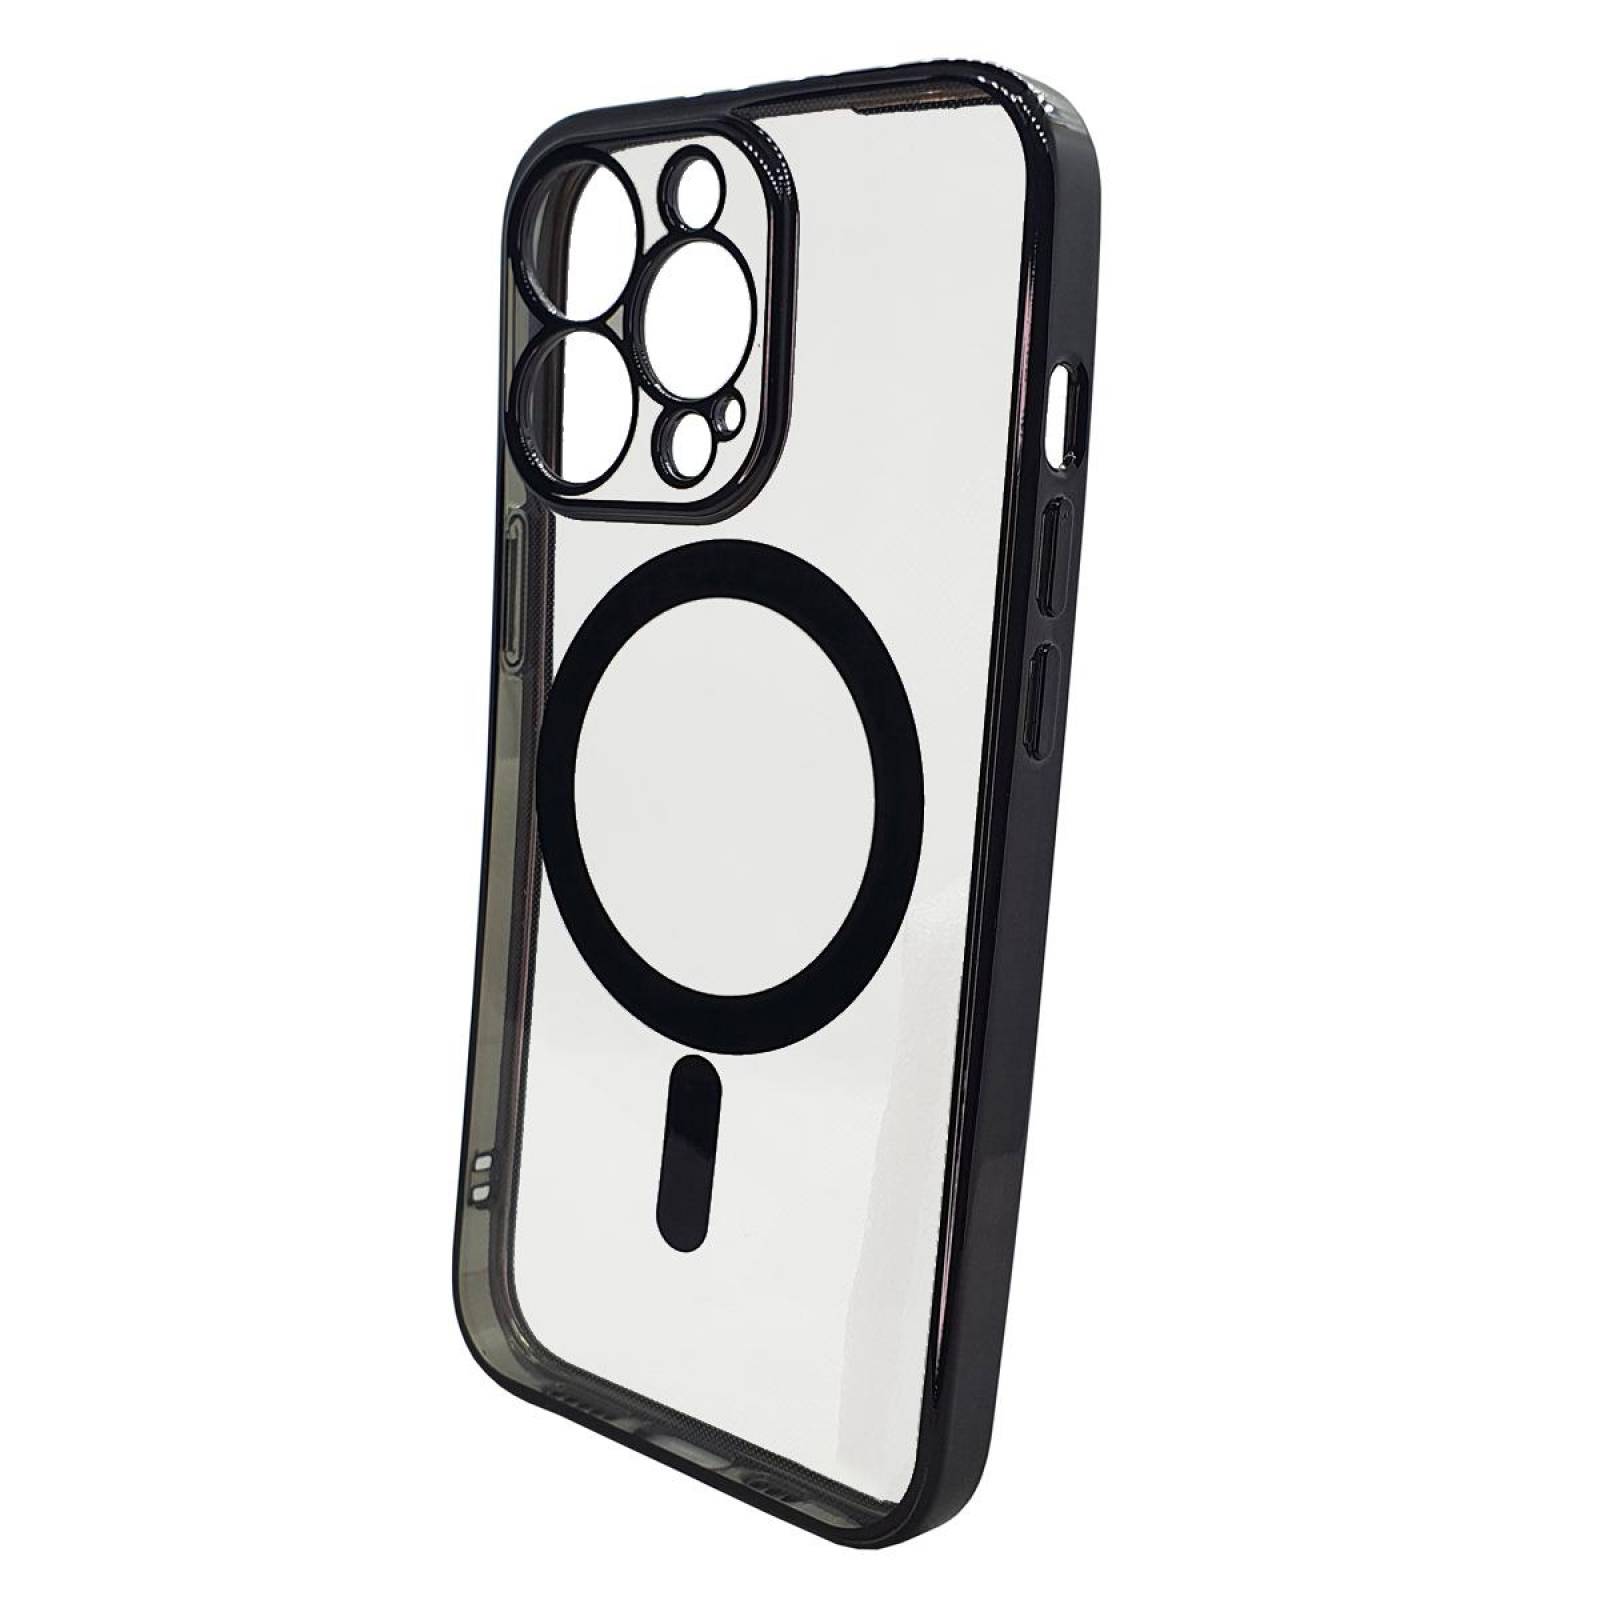 Case protector transparente orilla negro para iPhone 13 Pro